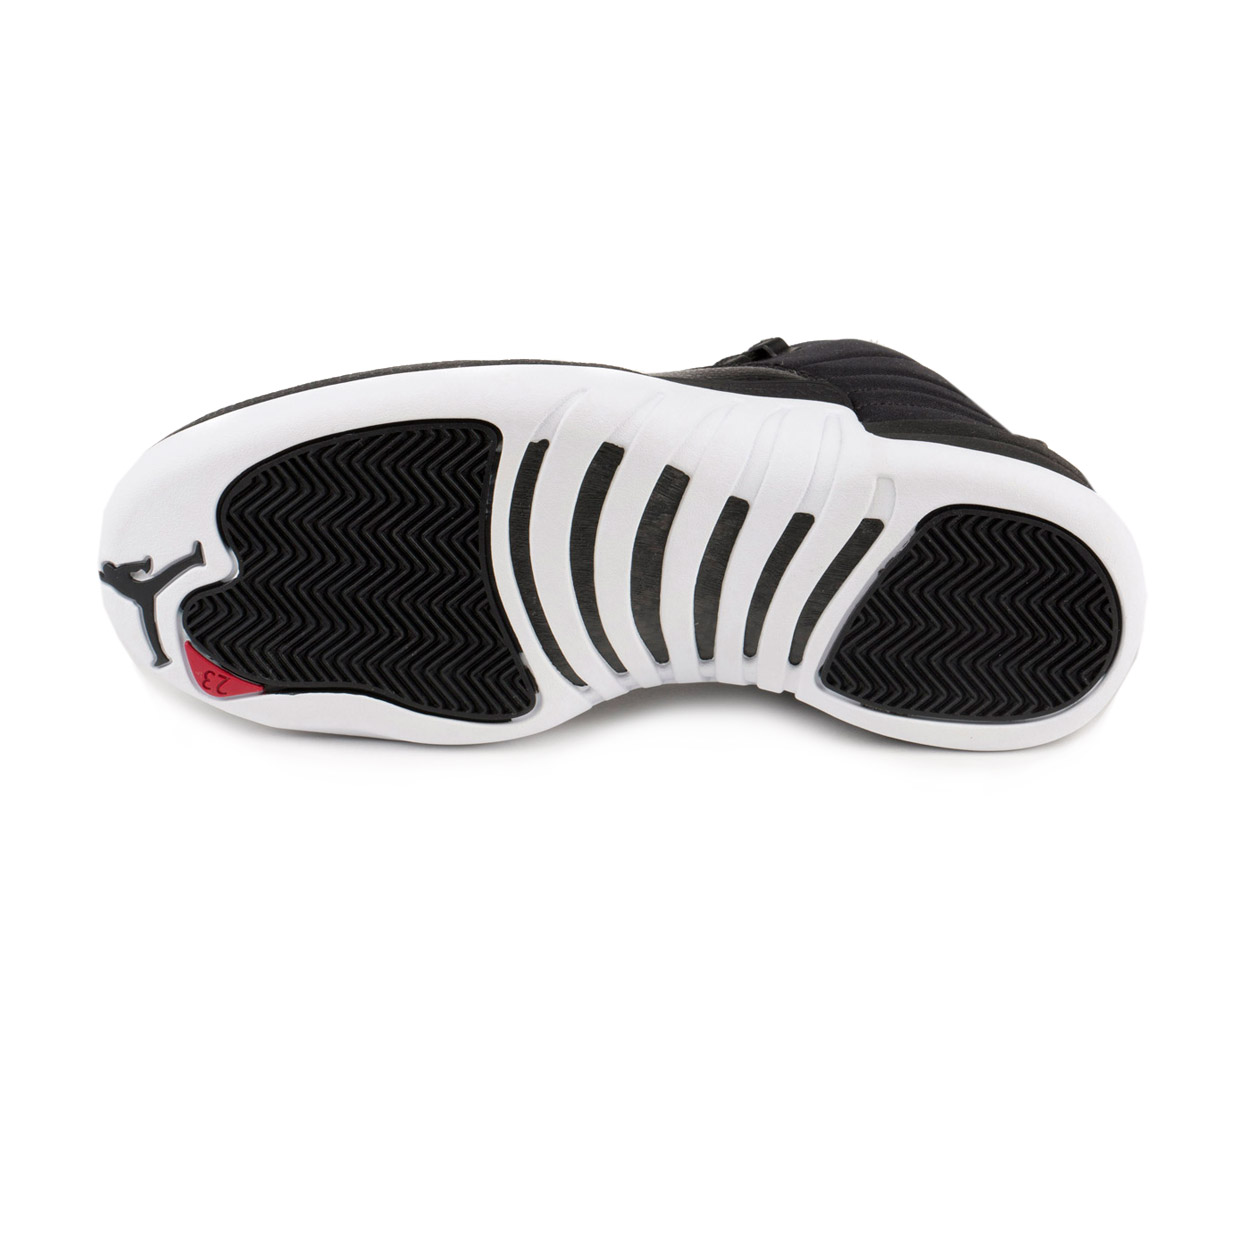 Nike Mens Air Jordan 12 Retro "NEOPRENE" Black/Gym Red-White 130690-004 - image 5 of 5